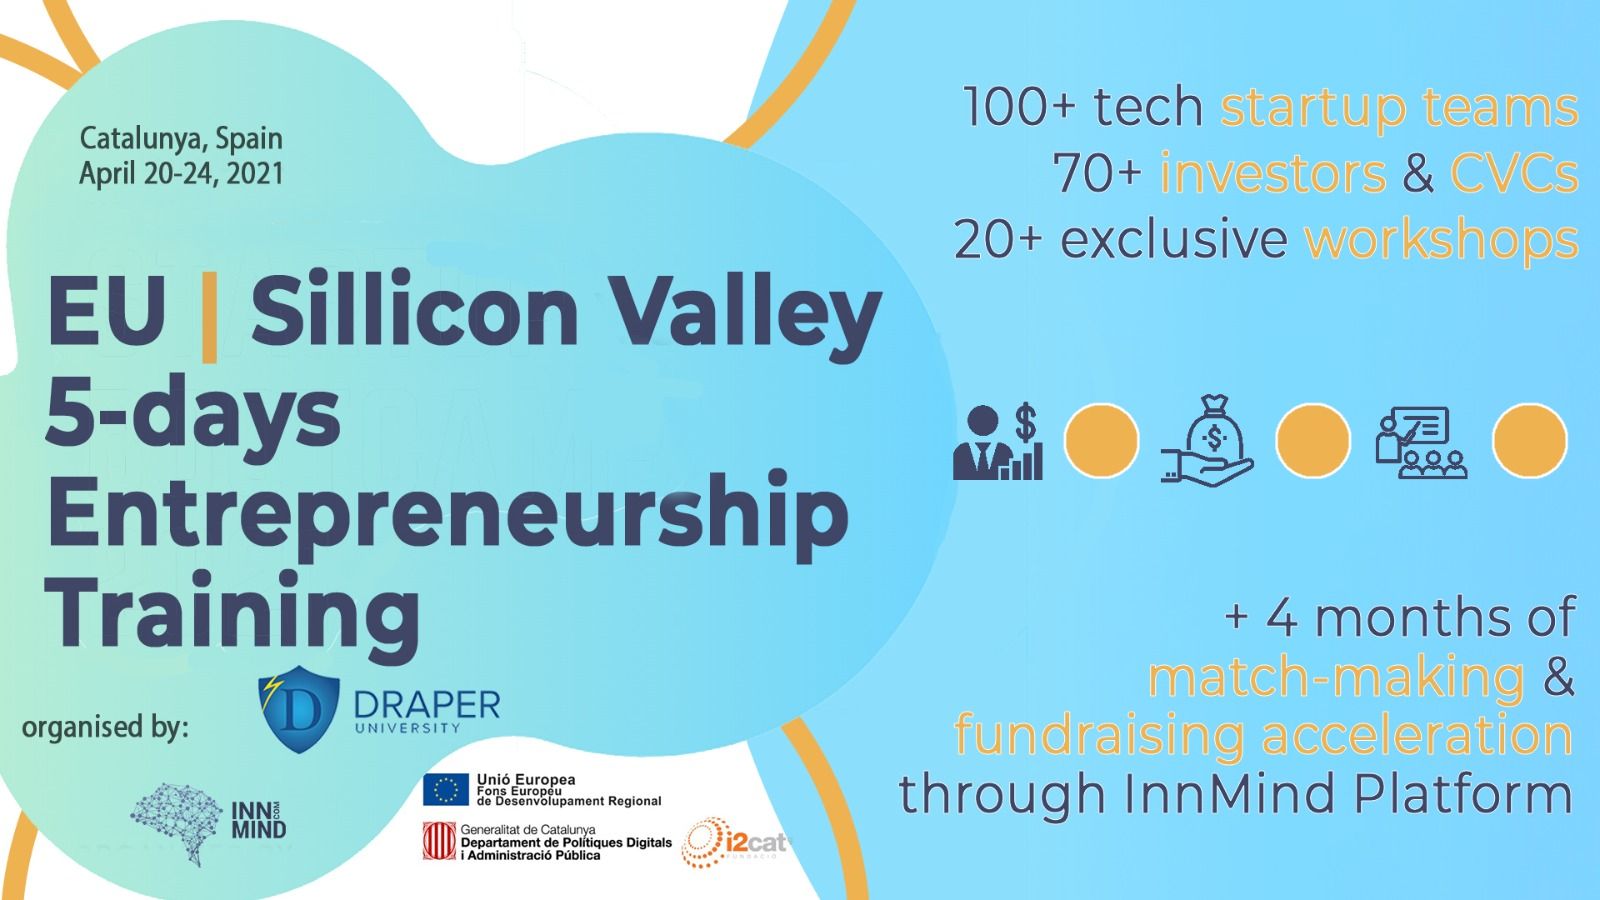 Draper University & InnMind Hold a Virtual Mentorship Session for EU | Sillicon Valley 5-days Entrepreneurship Training Residents